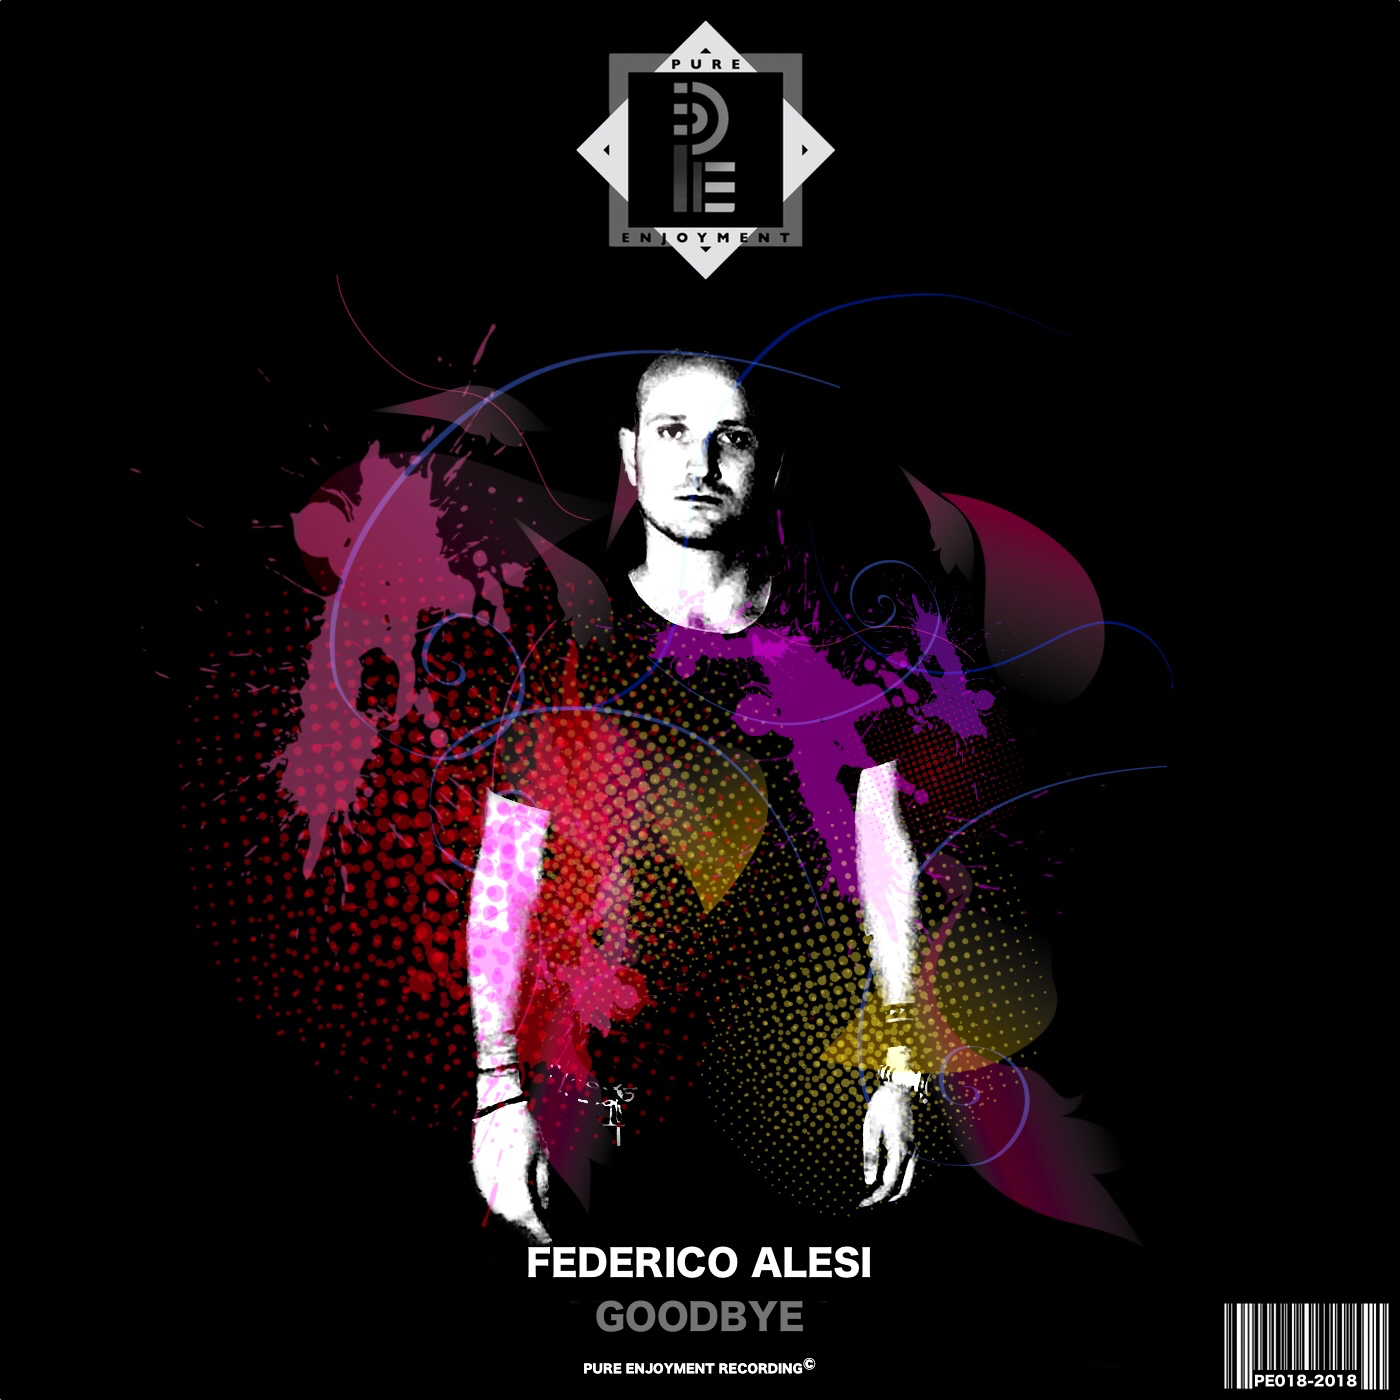 About Us (Federico Alesi Remix)